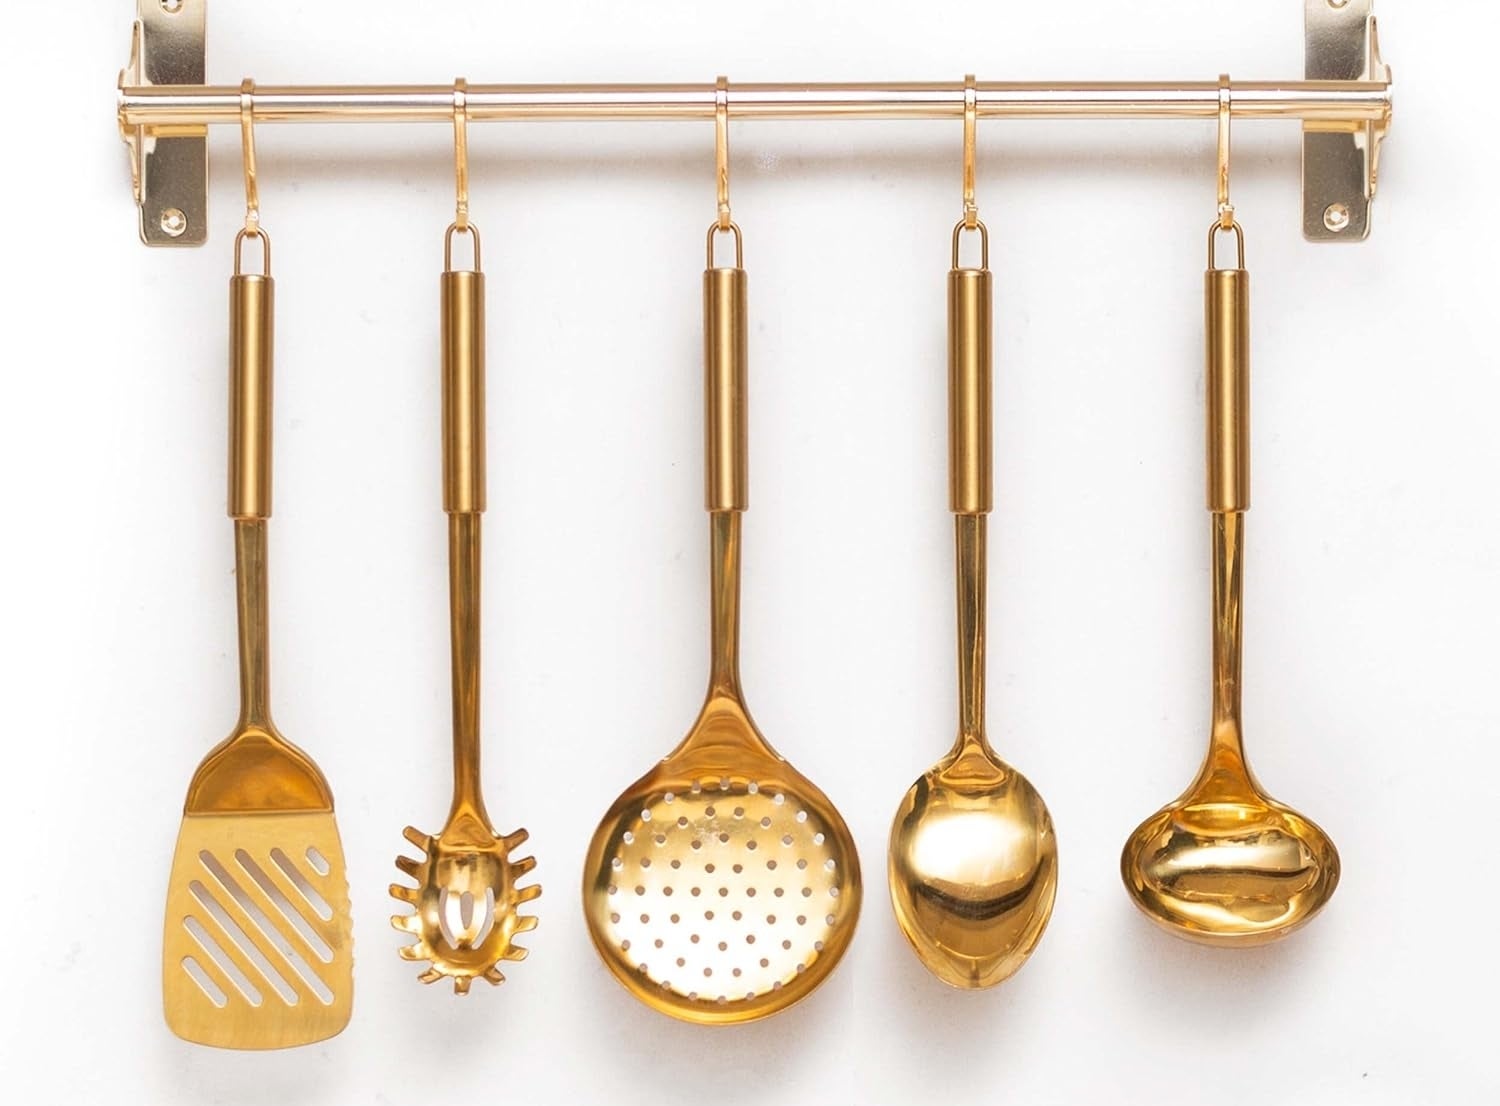 Five brass kitchen utensils hanging on a rack